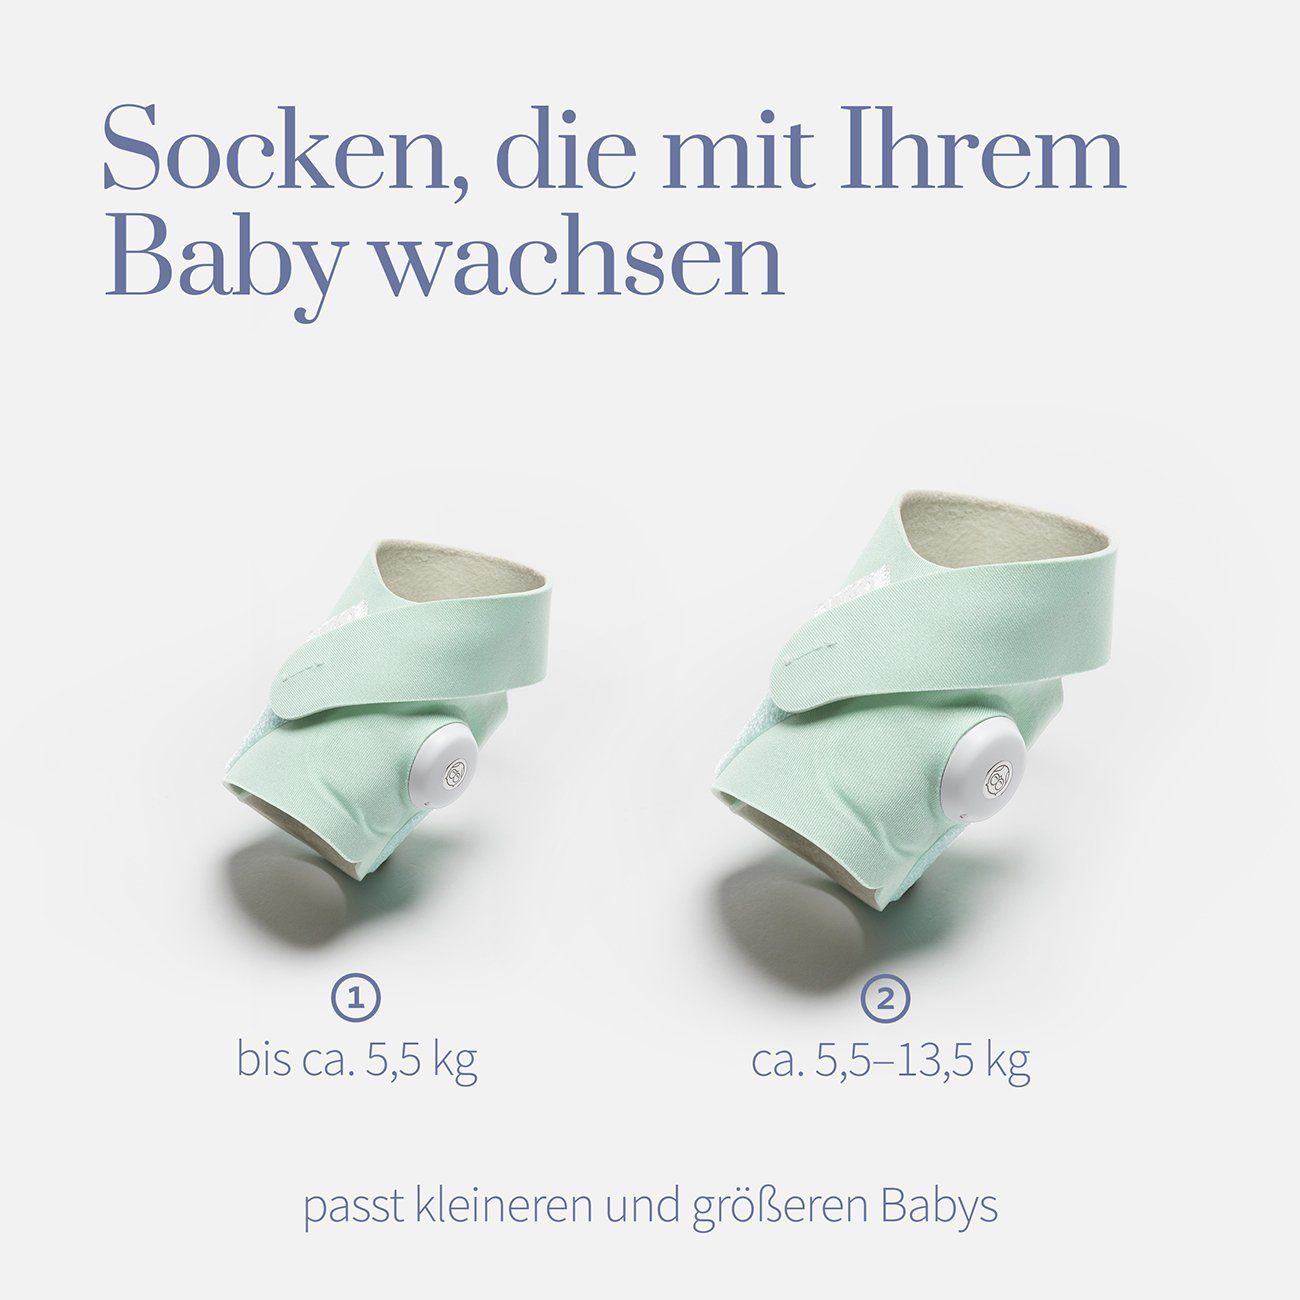 Herzfrequenz 3 via App Original-Mintgrün Schlaf und Tracking Smart Owlet Sock Smart - DE Baby Babyphone, von Sock, Care